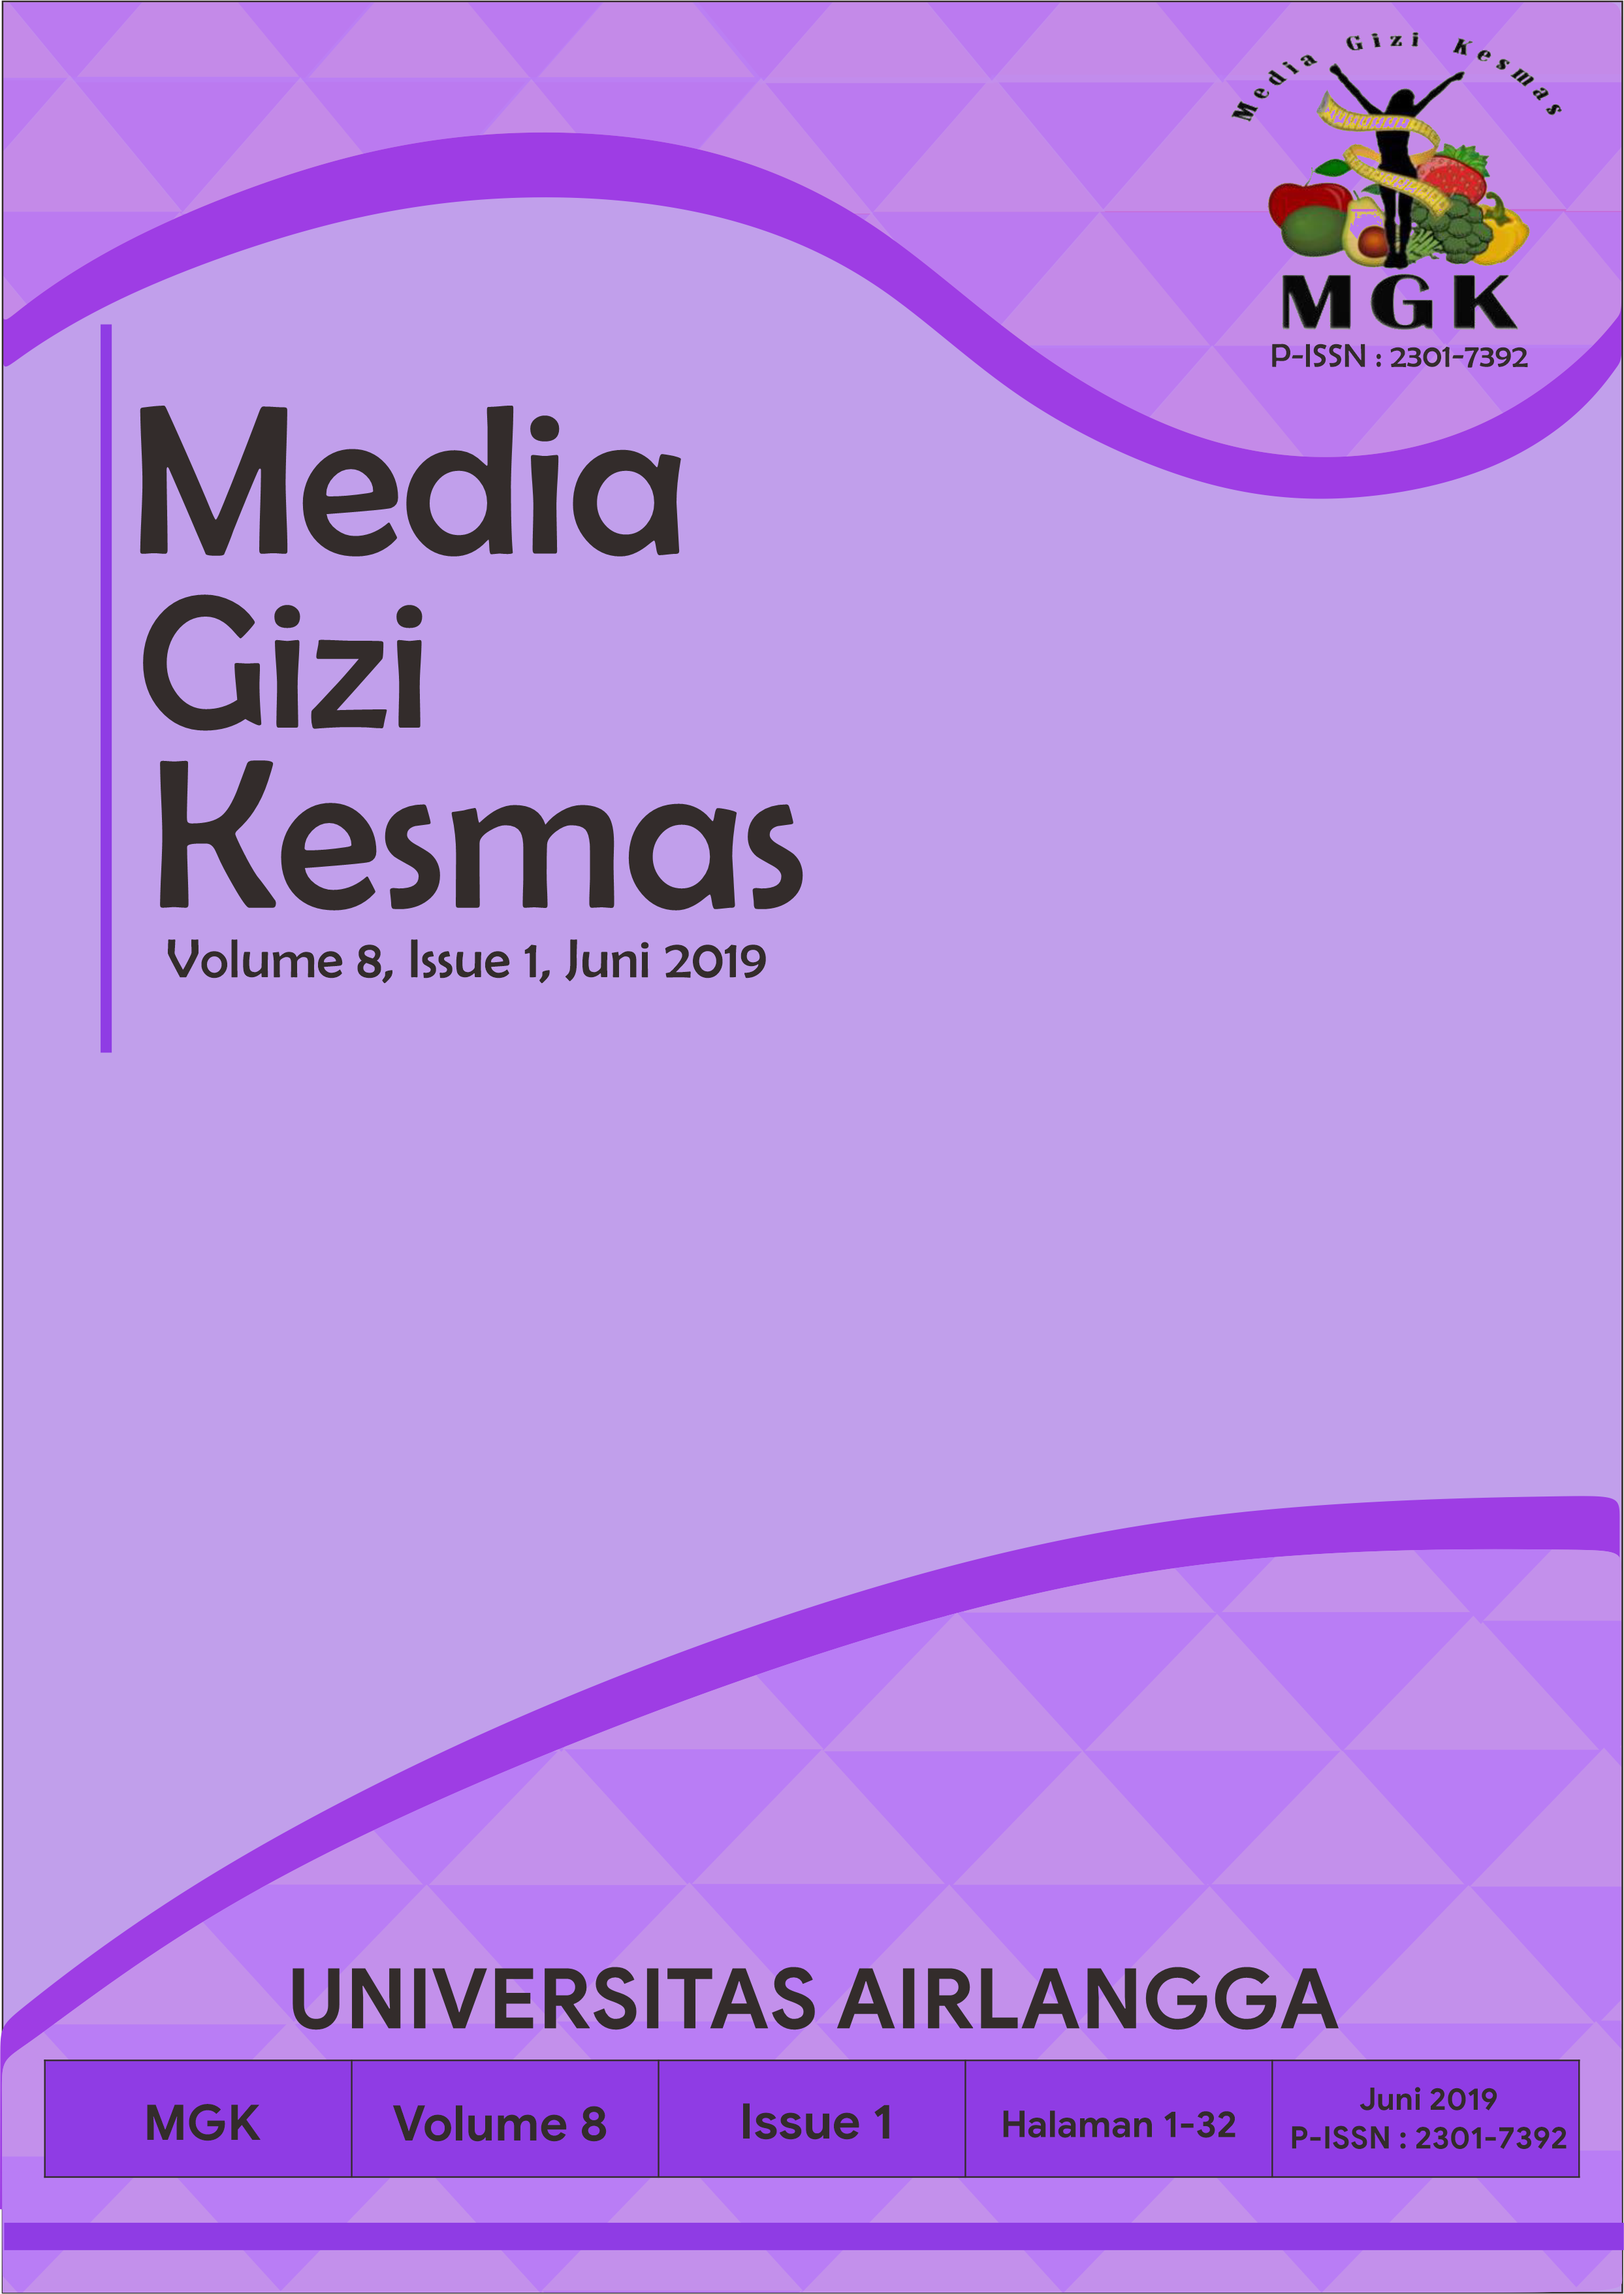 						View Vol. 8 No. 1 (2019): MEDIA GIZI KESMAS (JUNE 2019)
					